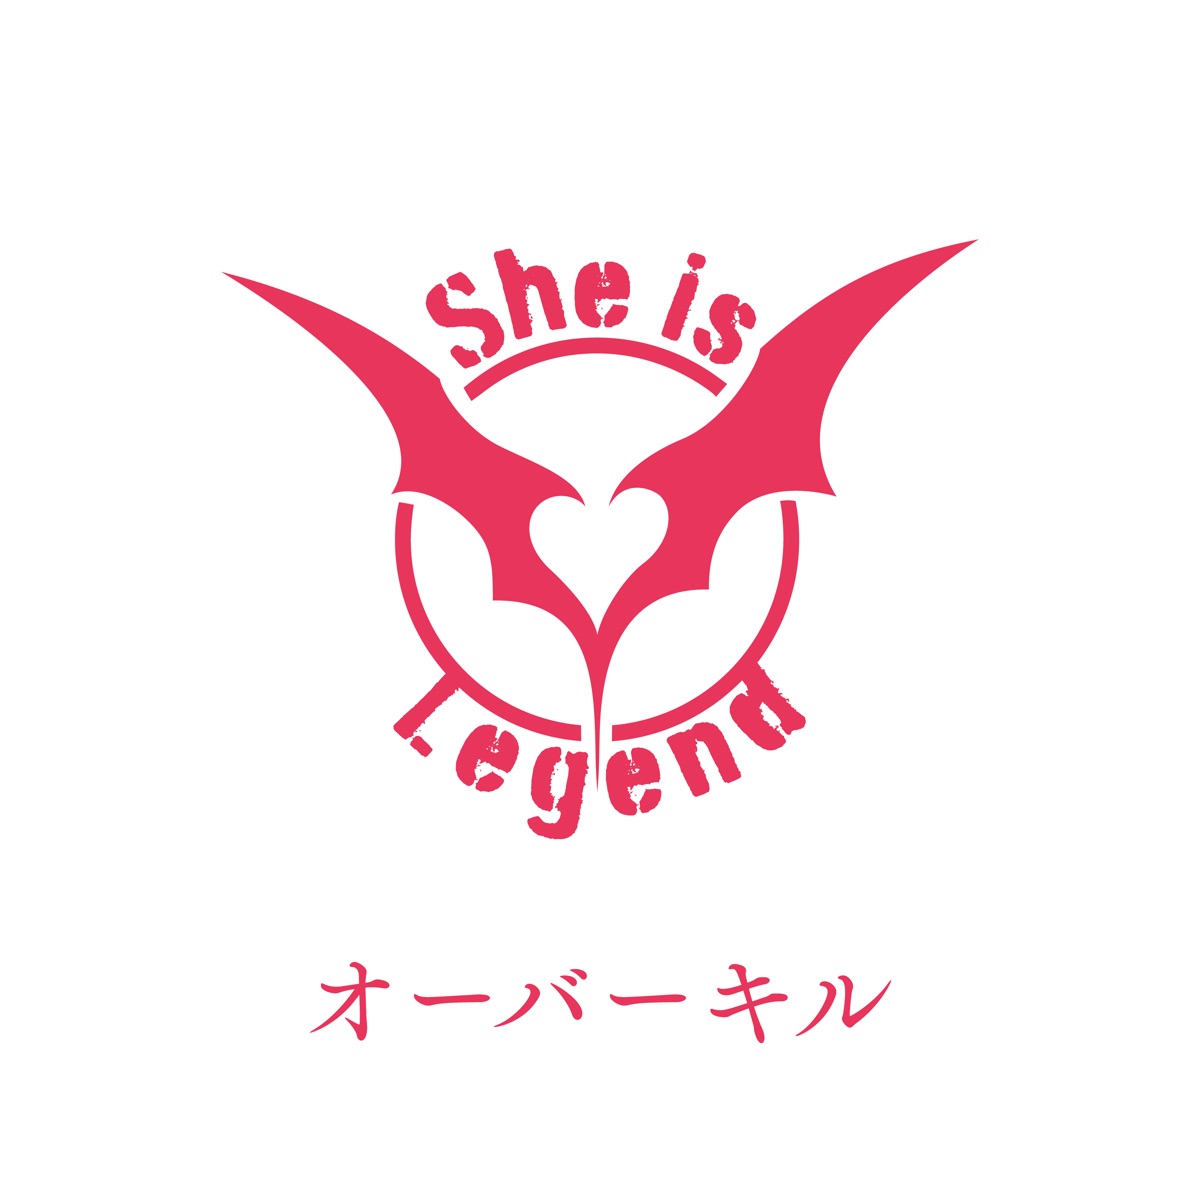 『She is Legend - オーバーキル』収録の『オーバーキル』ジャケット